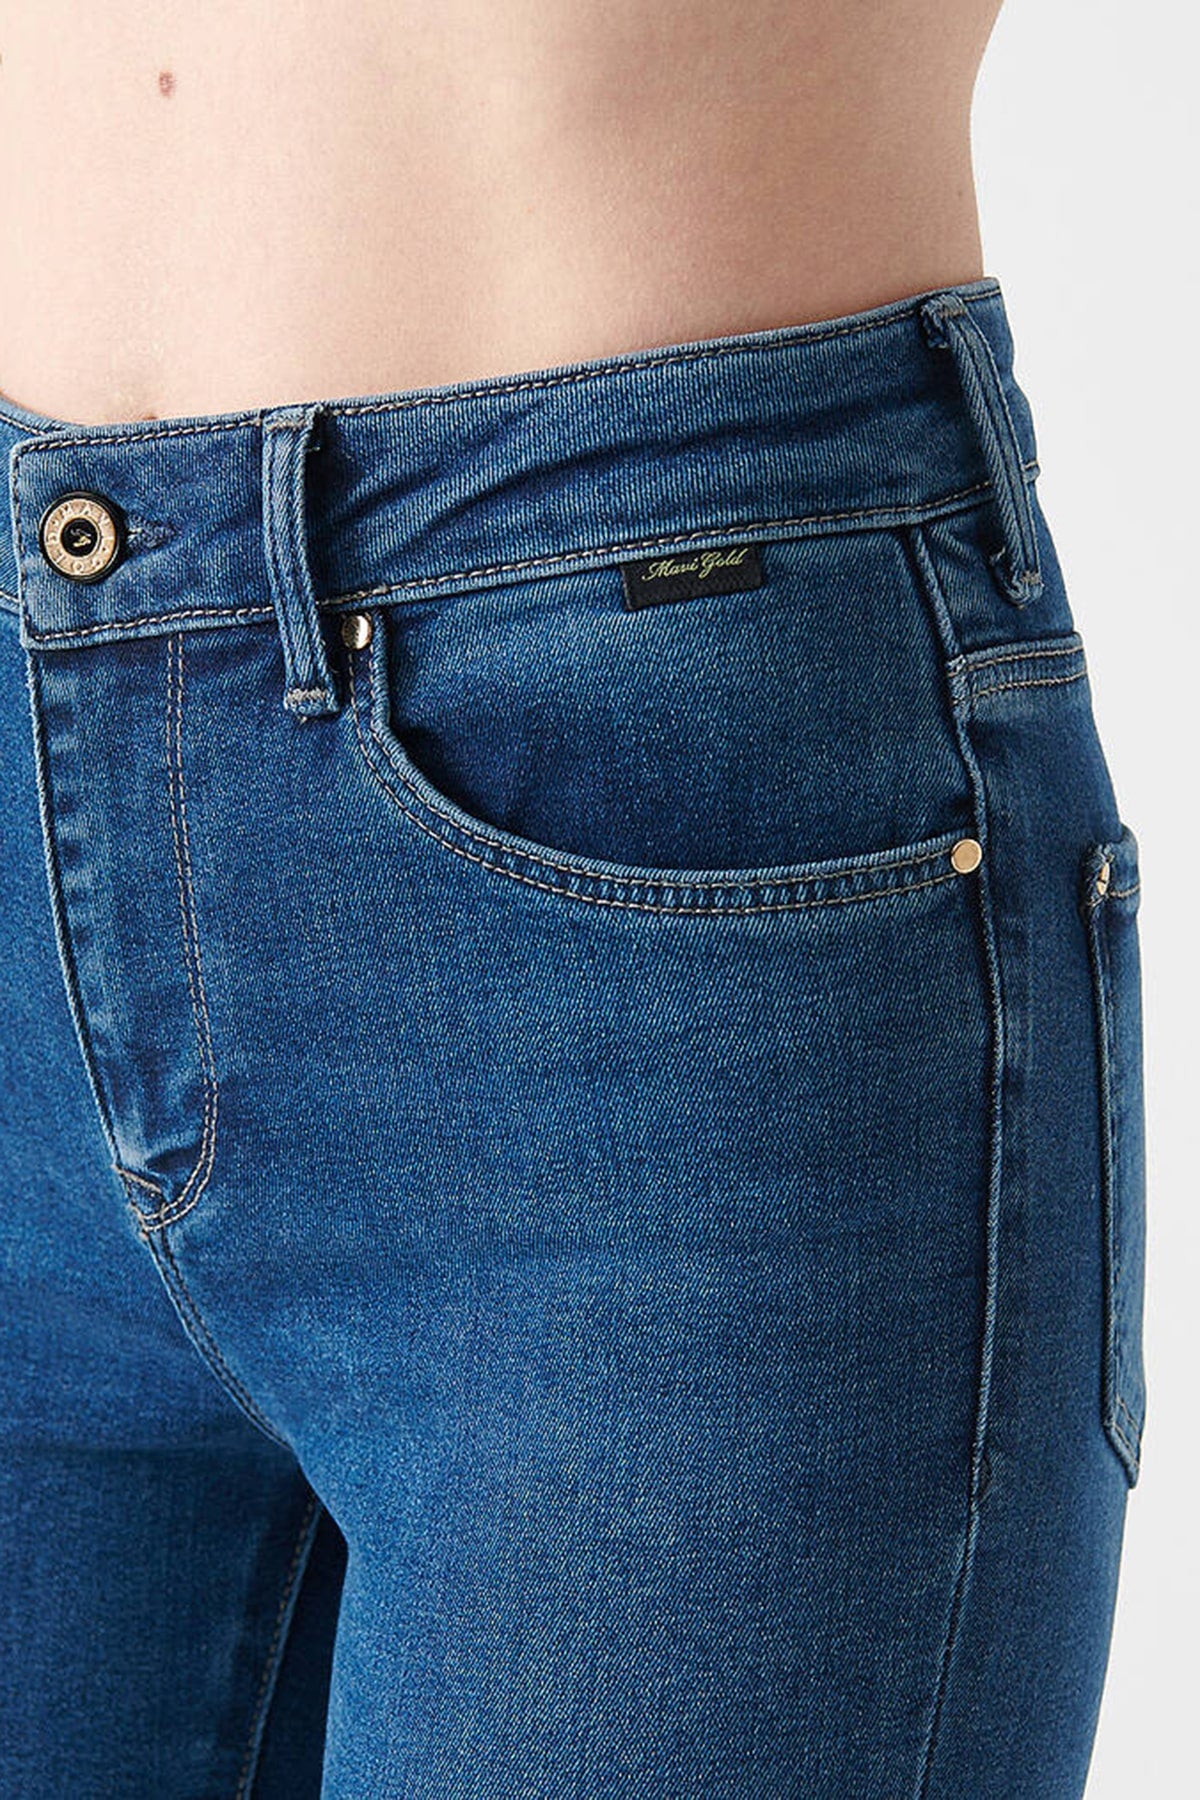 Mavi Tess Pamuklu Skinny Fit Yüksek Bel Dar Paça Jeans Bayan Kot Pantolon 100328-83011 KOYU MAVİ